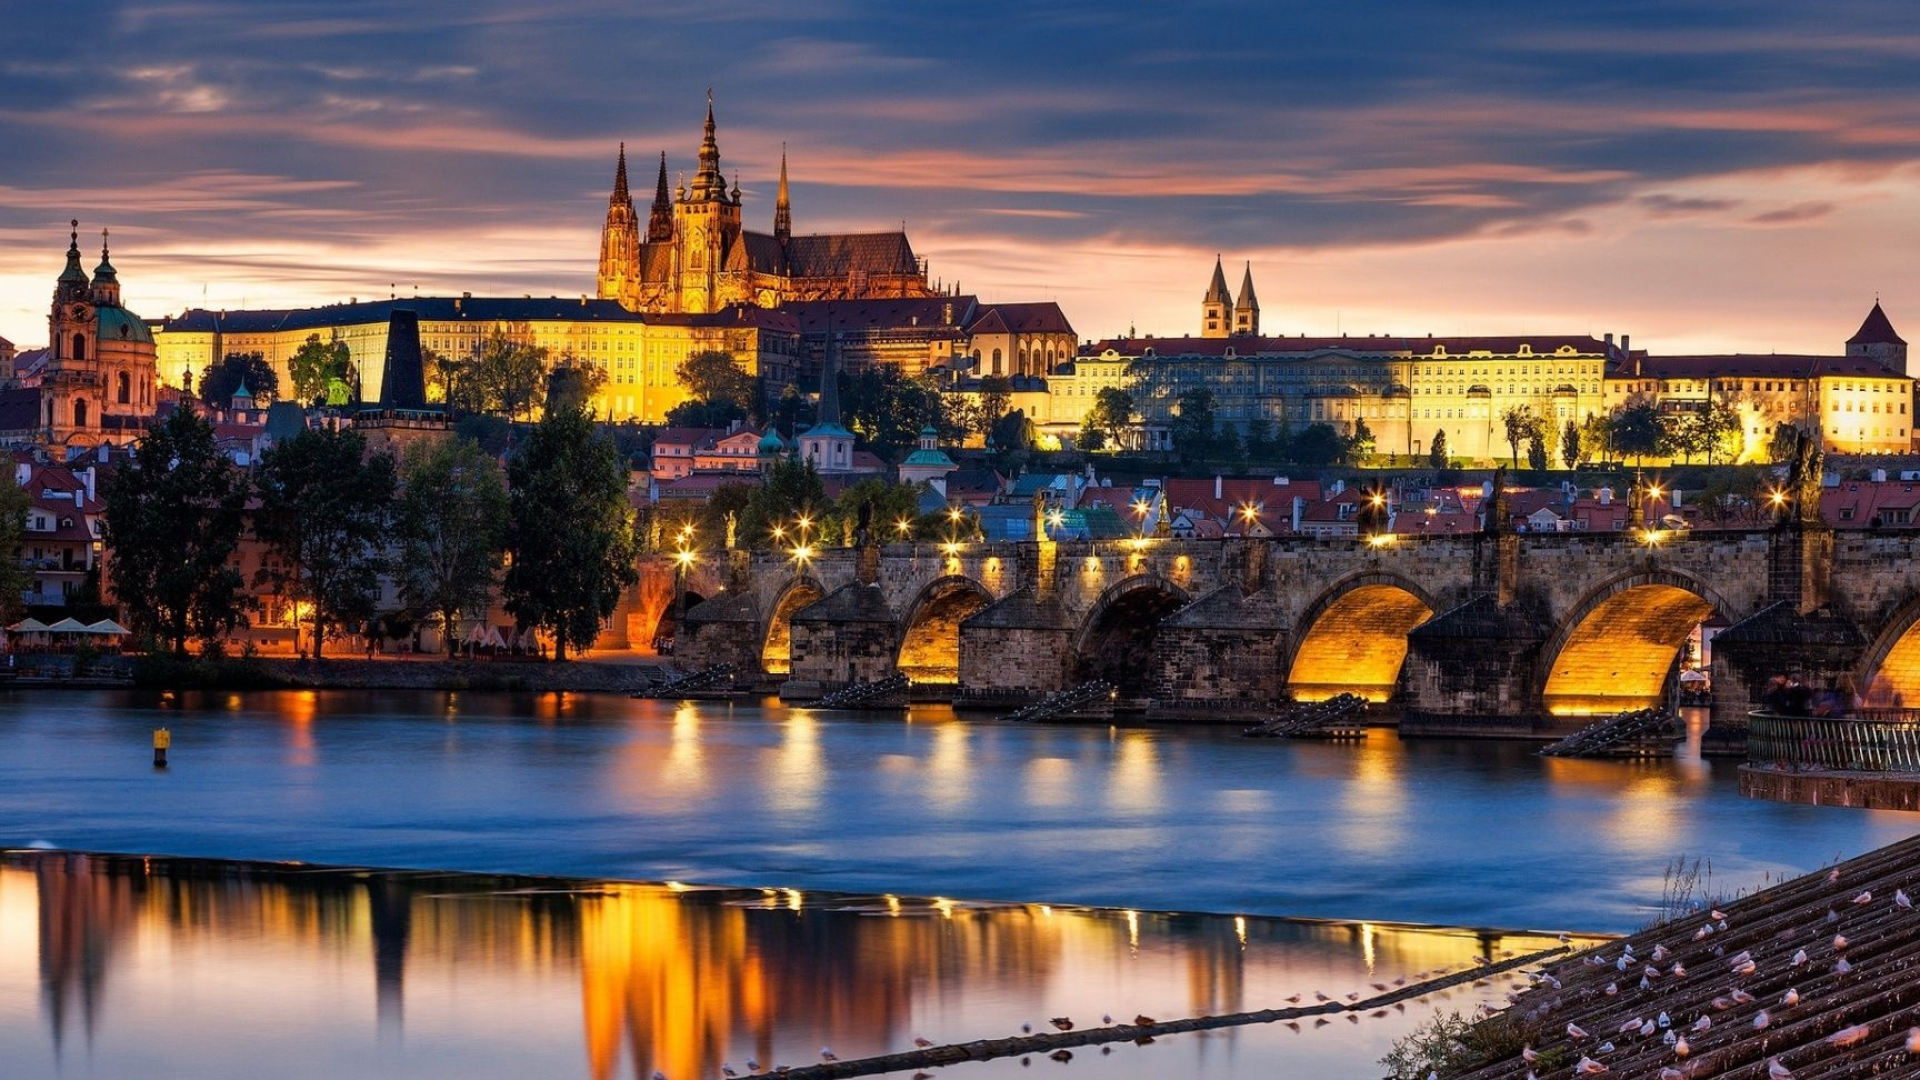 Prague Castle, Wallpaper-worthy, Beautiful backgrounds, Historical architecture, 1920x1080 Full HD Desktop